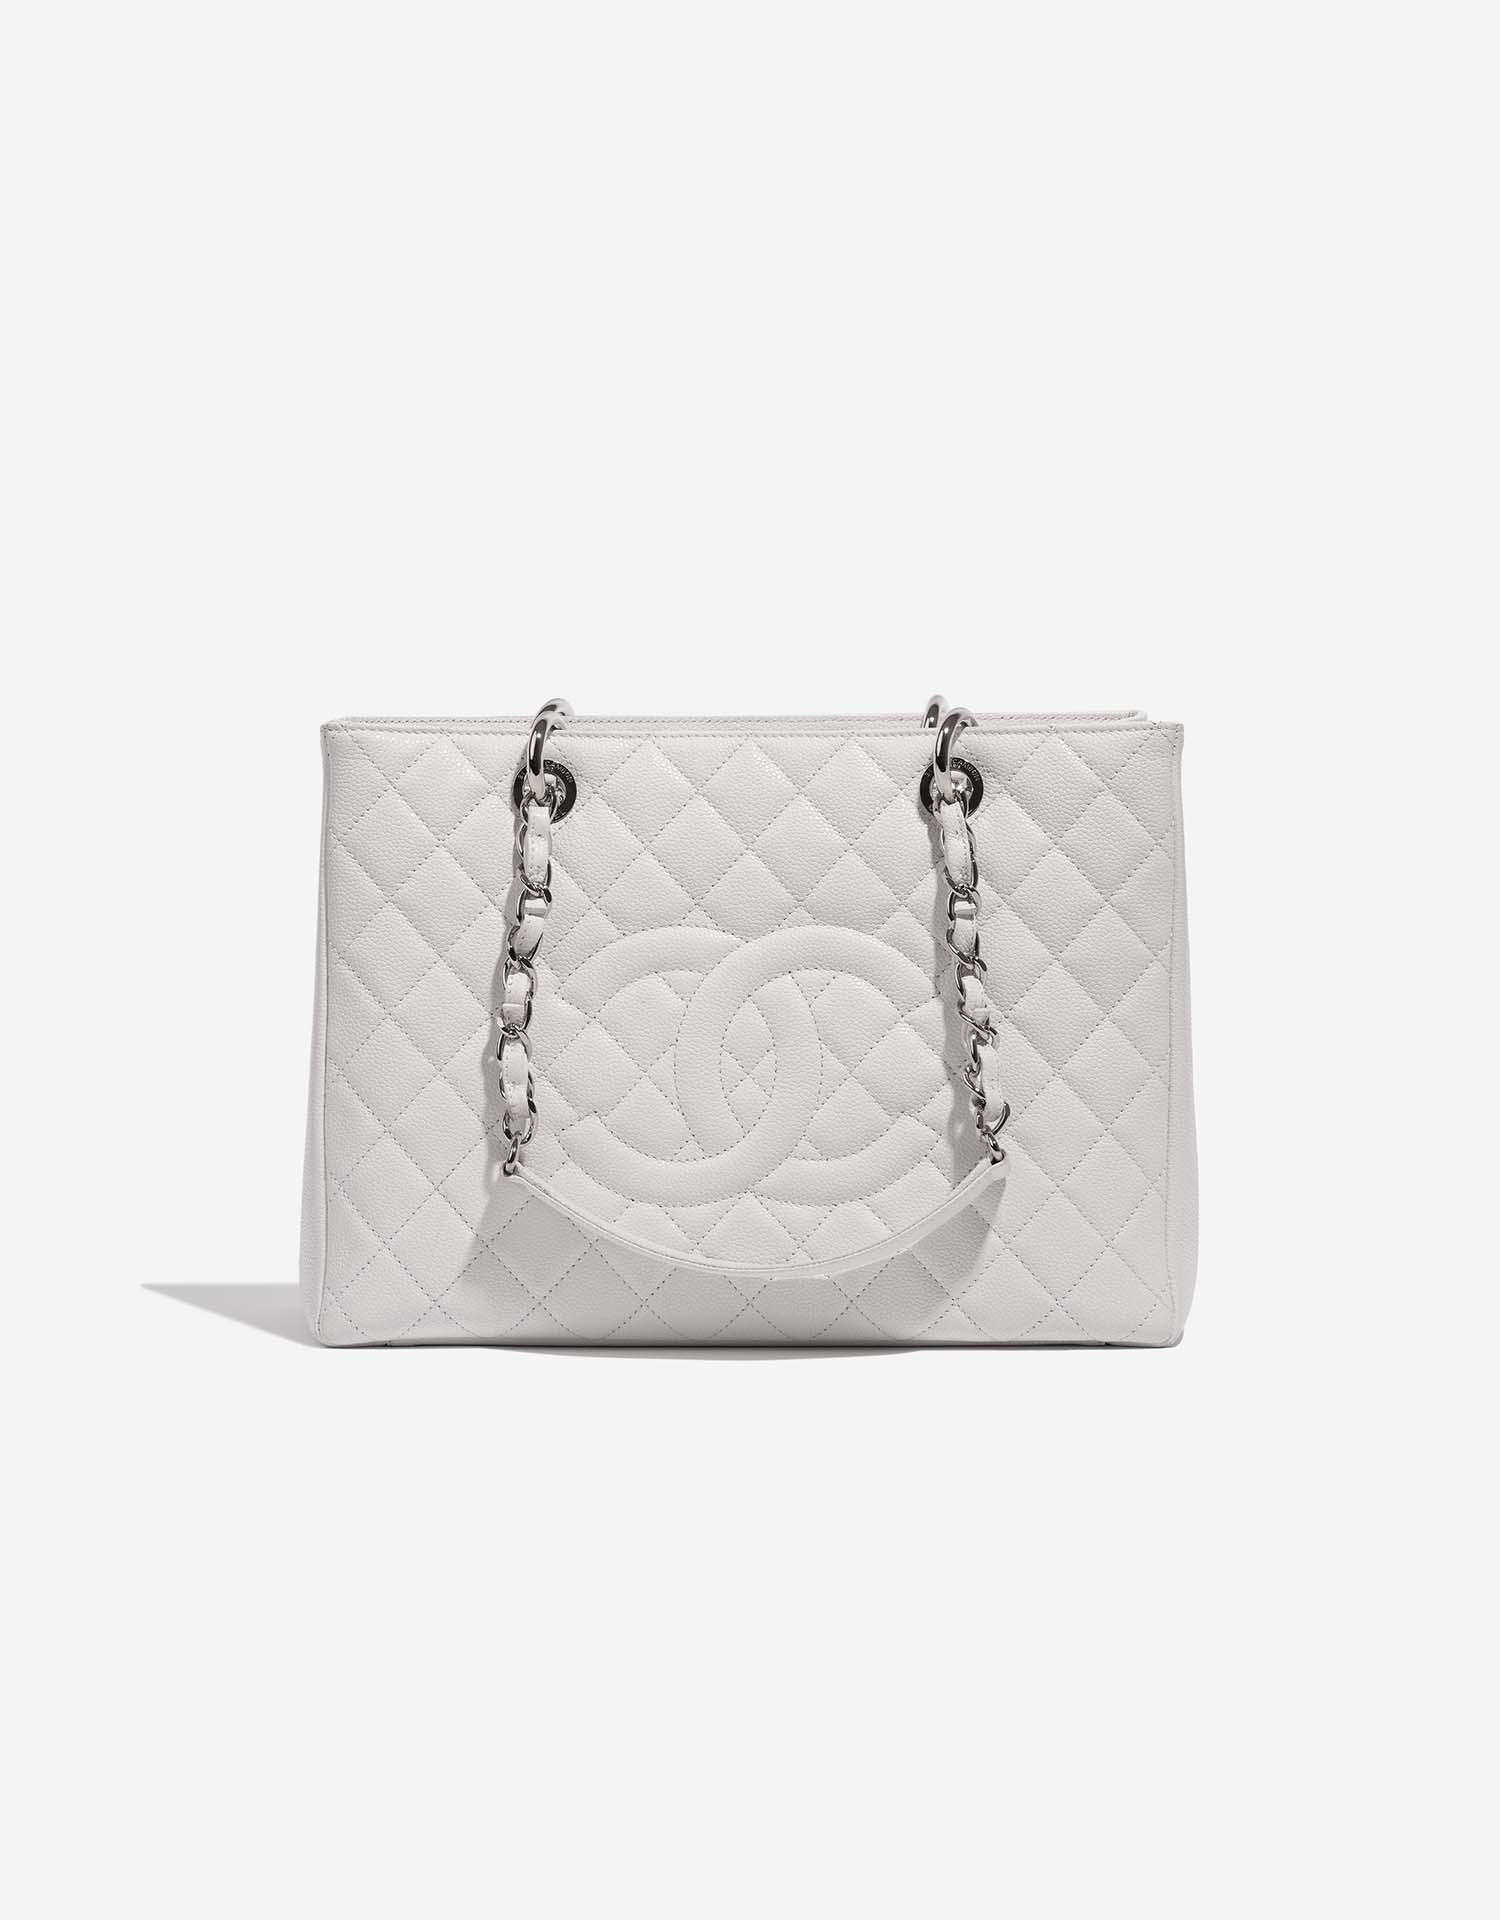 Second-hand Designer Chanel Handbags |